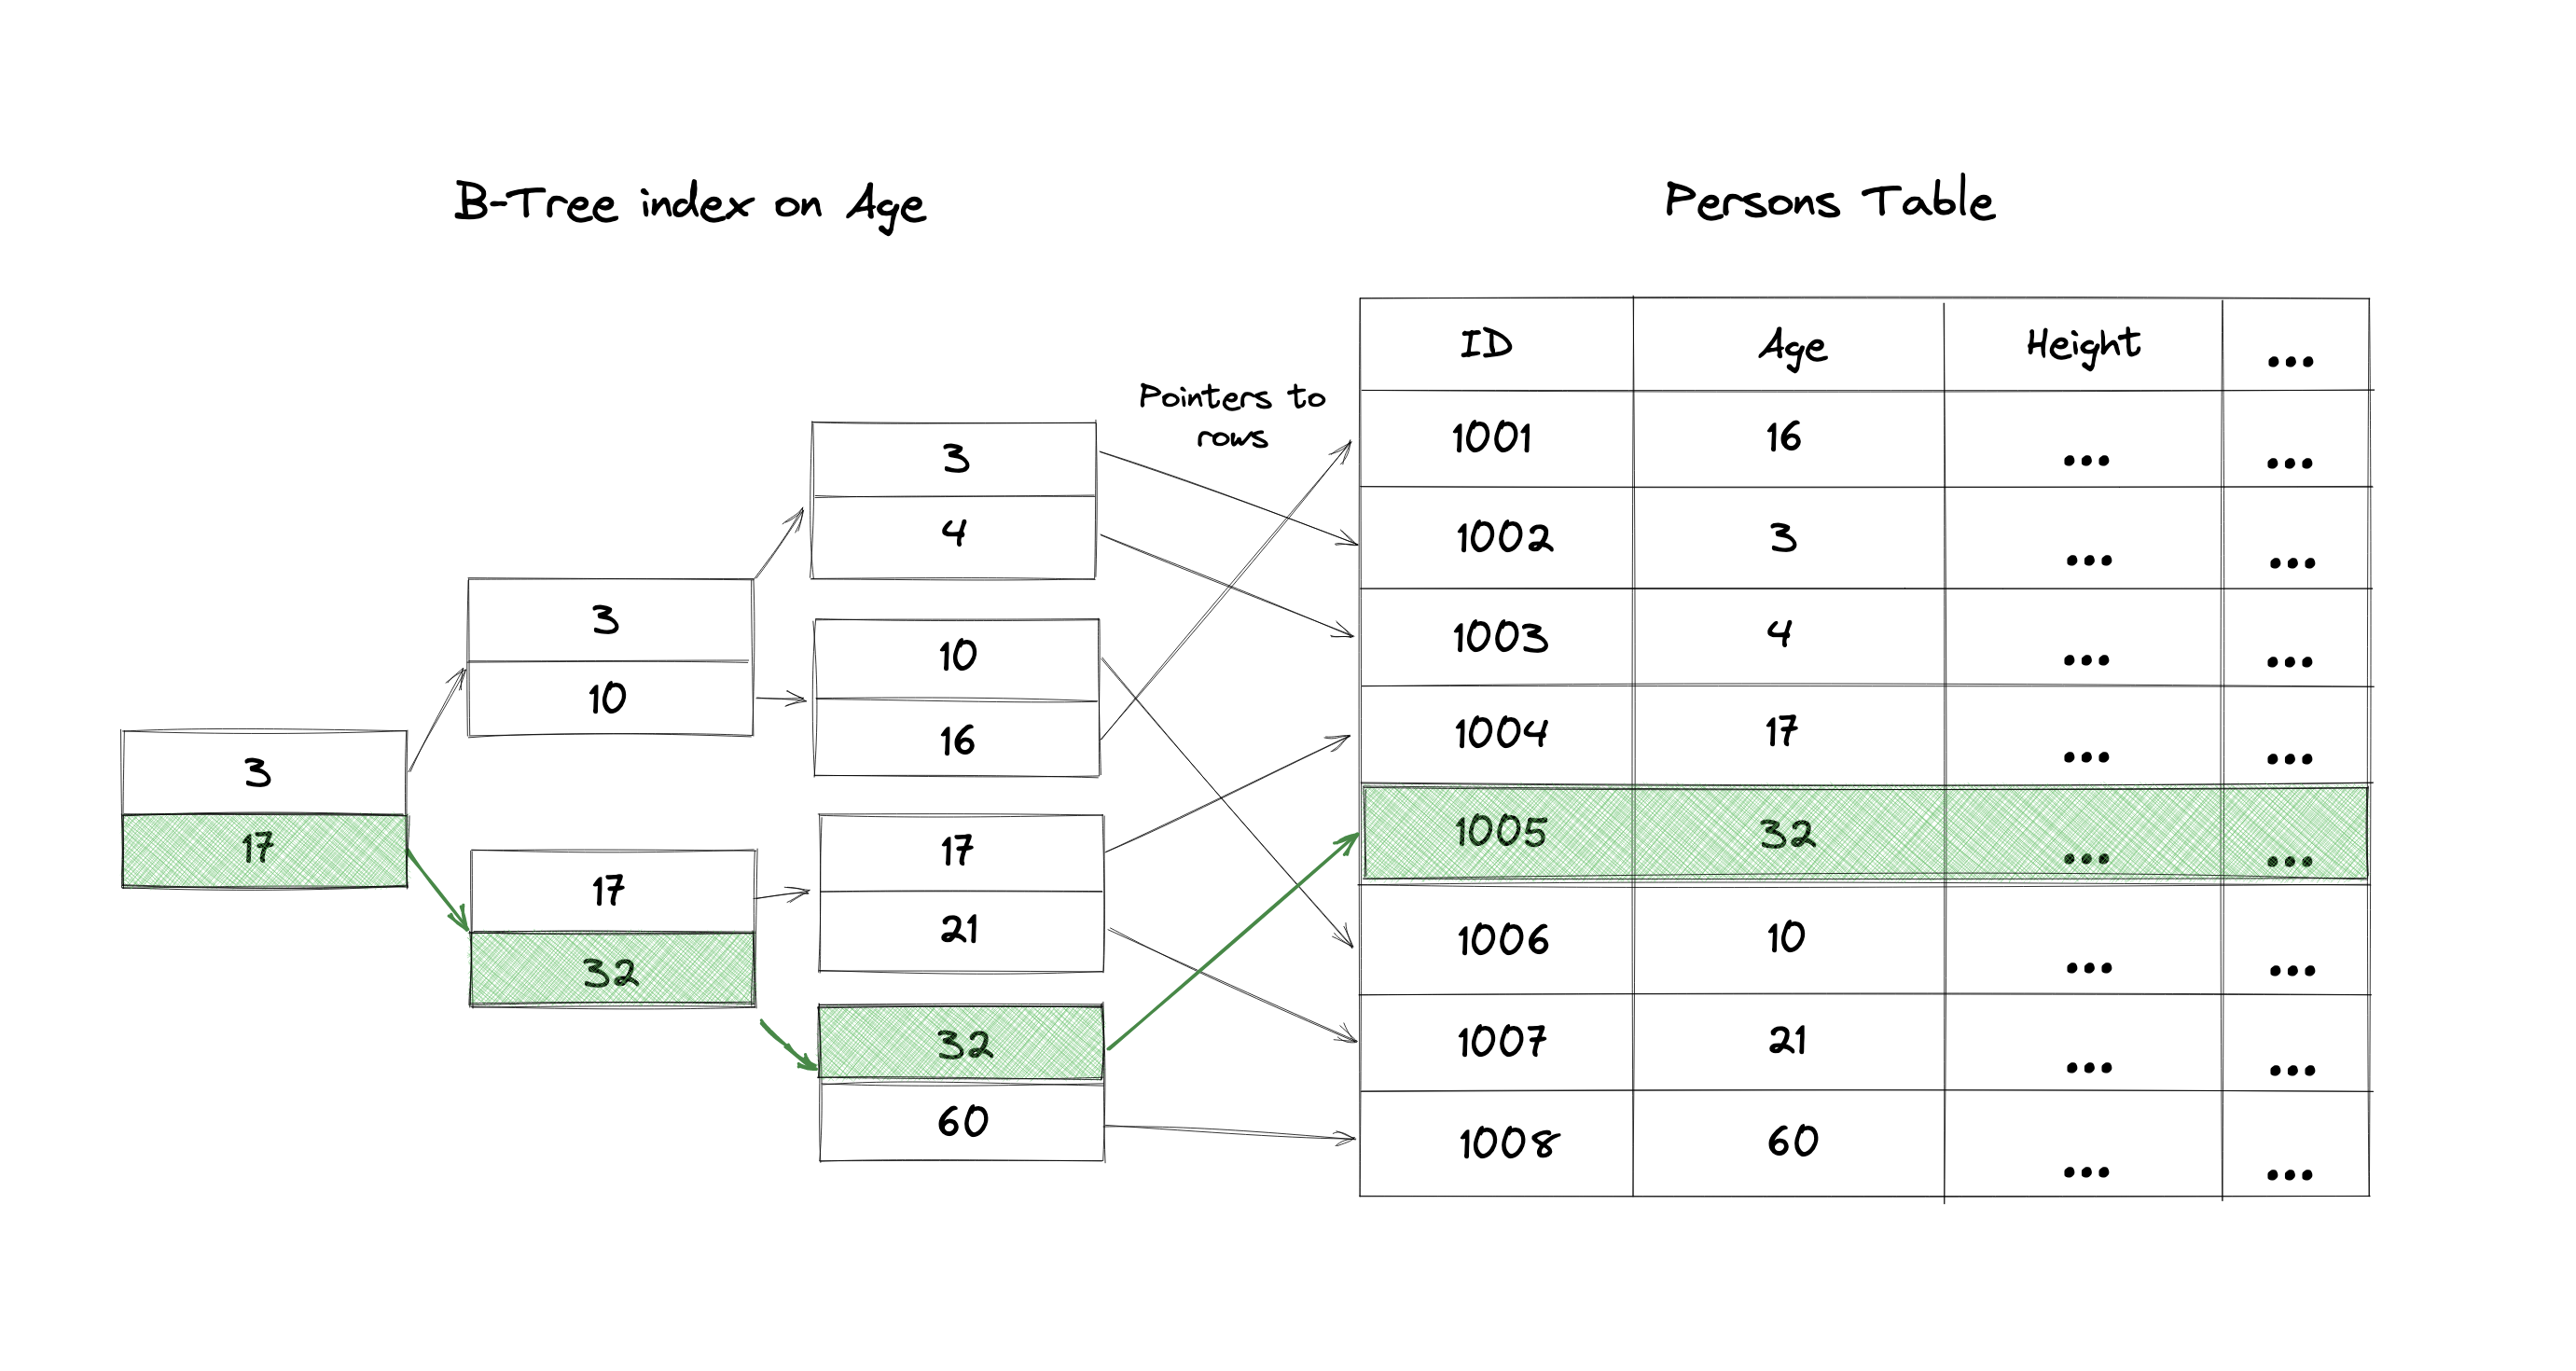 B-Tree index example in Postgres